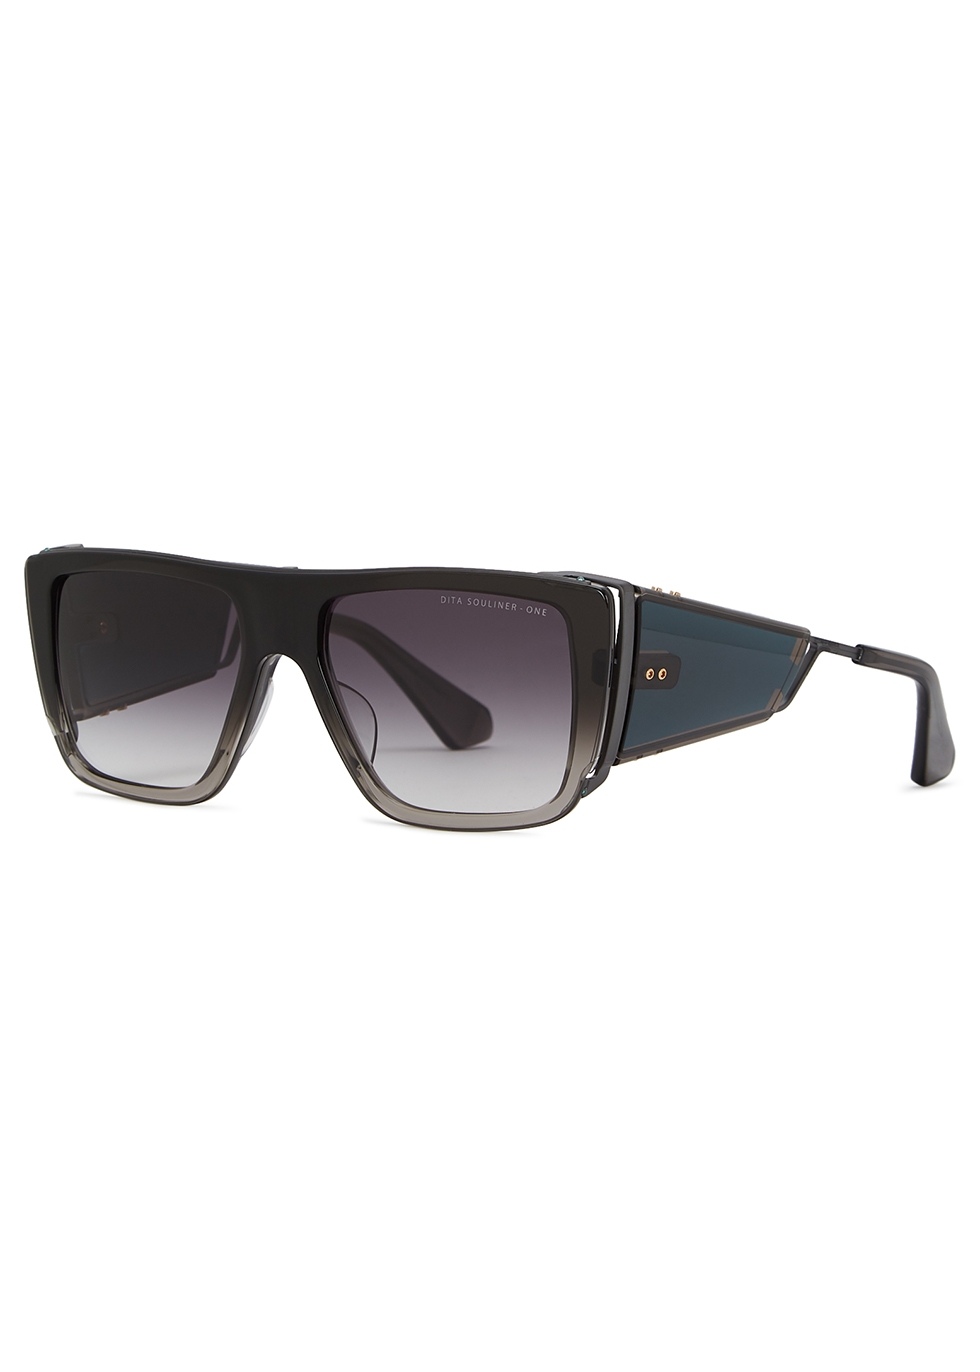 DITA Souliner grey D-frame sunglasses - Harvey Nichols